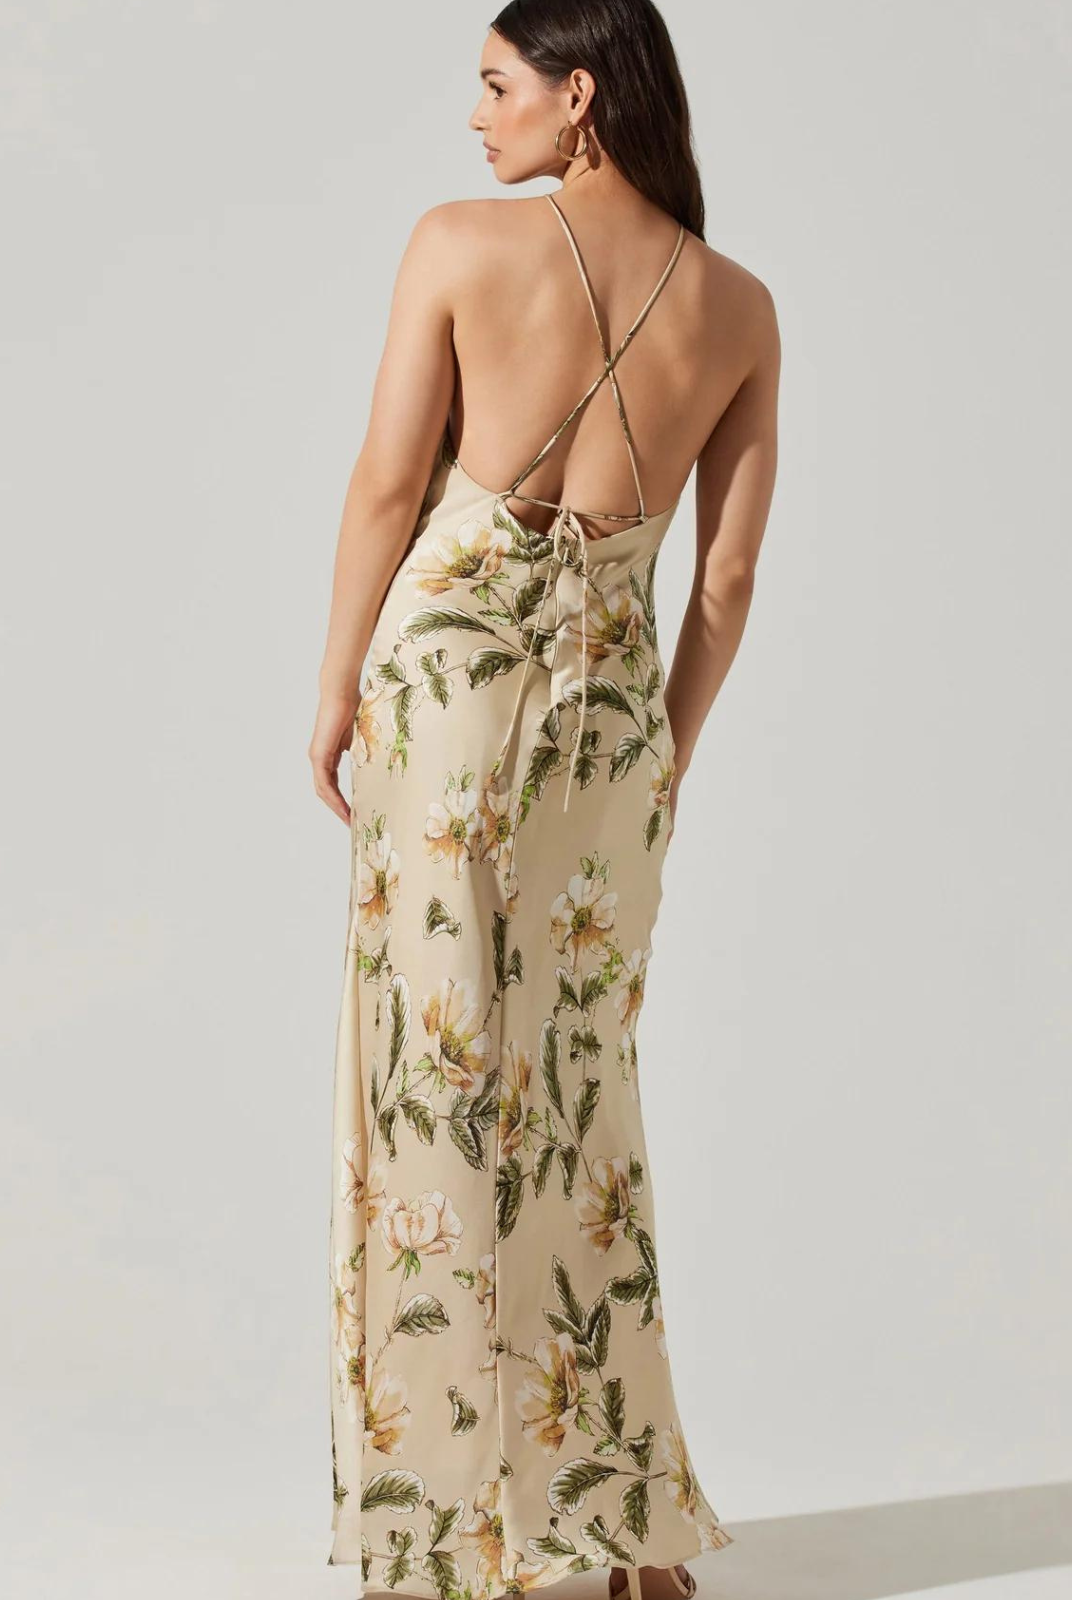 ASTR The Label Elynor Dress. Satin finish, floral print, exaggerated side slit Halter neck, strappy back, concealed back zipper